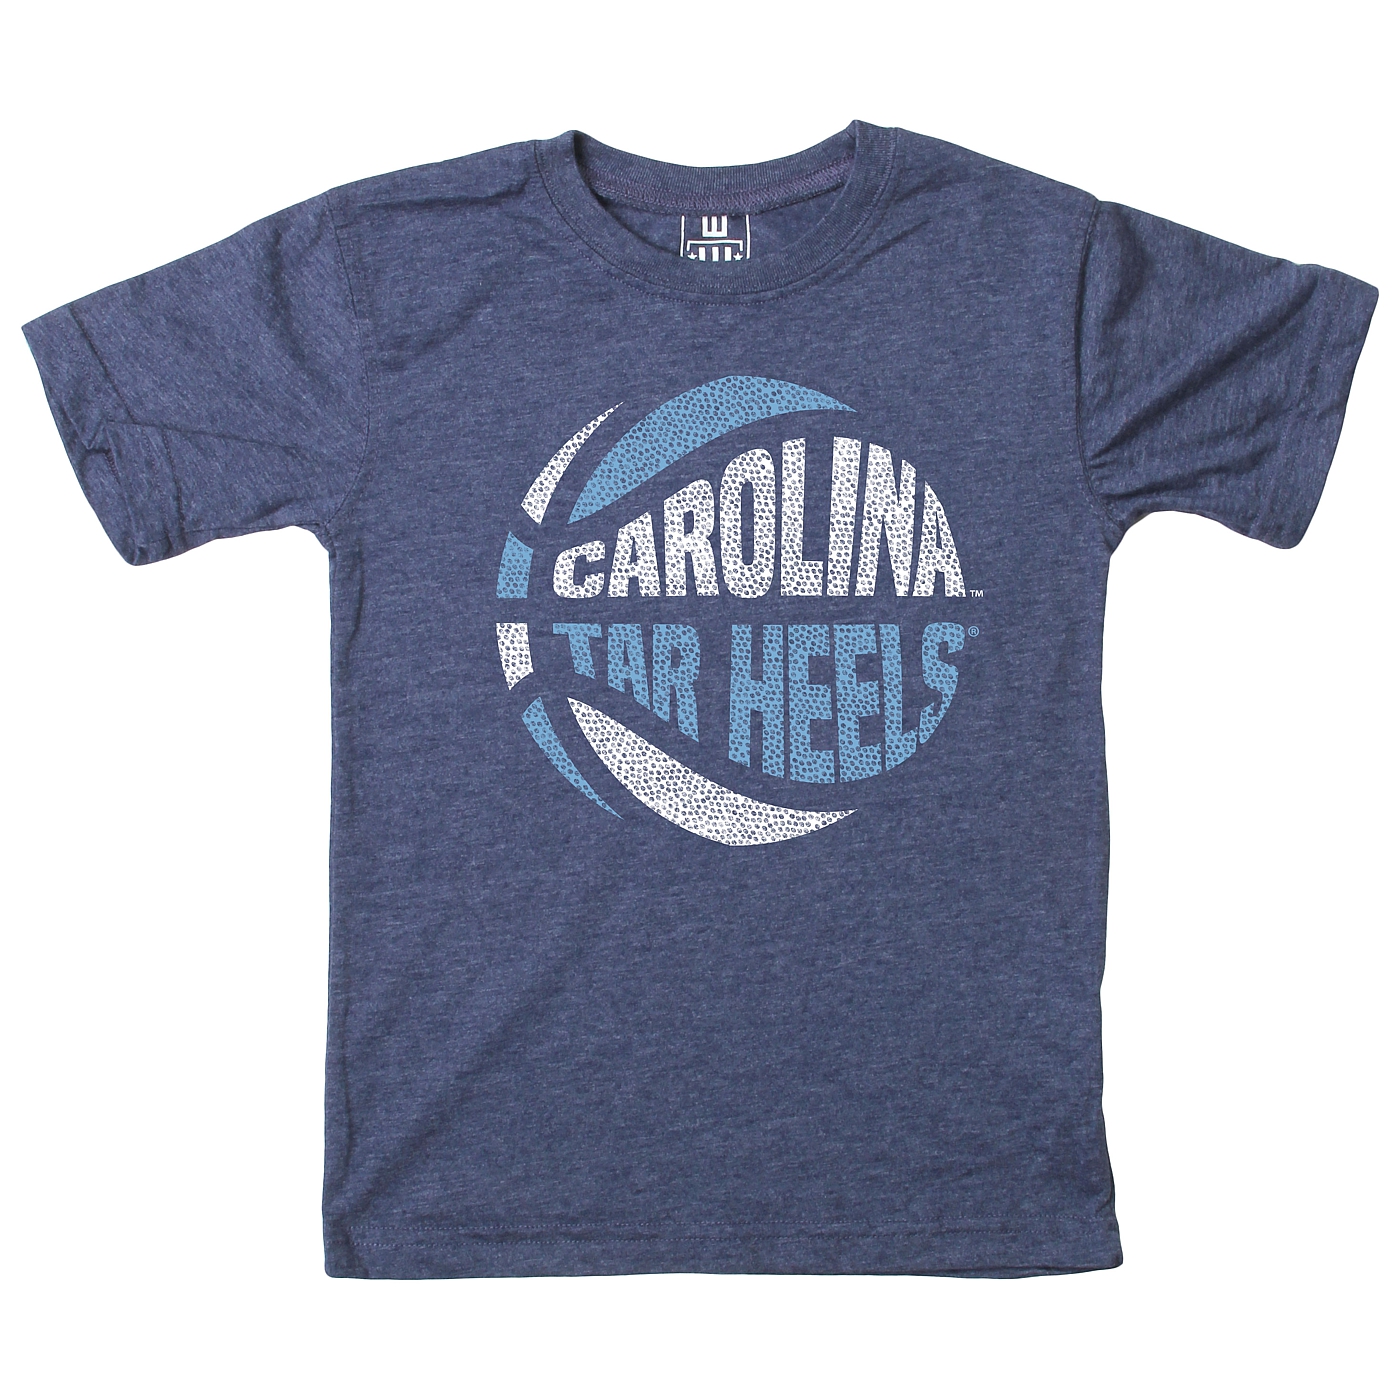 Johnny T-shirt - North Carolina Tar Heels - Youth Basketball Elite Stripe  Shorts (Navy) by Nike